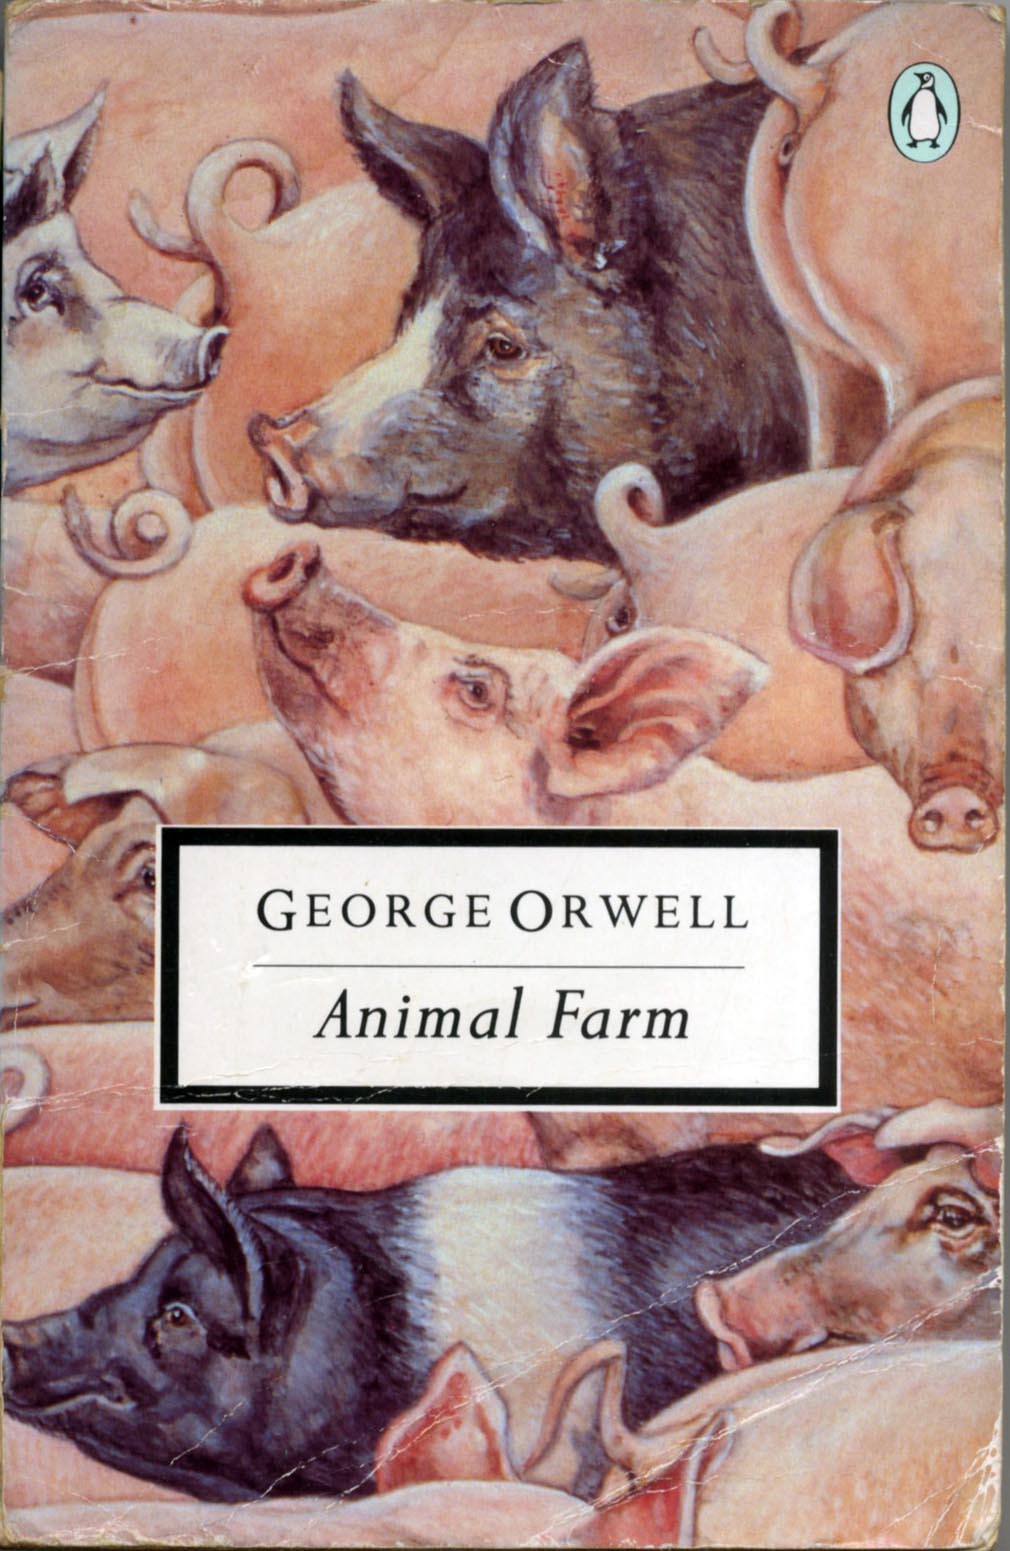 Читать книгу оруэлла скотный двор. Джордж Оруэлл 1984 Скотный двор. Скотный двор Джордж Оруэлл обложка. Скотный двор Джордж Оруэлл книга иллюстрации. Книга animal Farm Джордж Оруэлл.